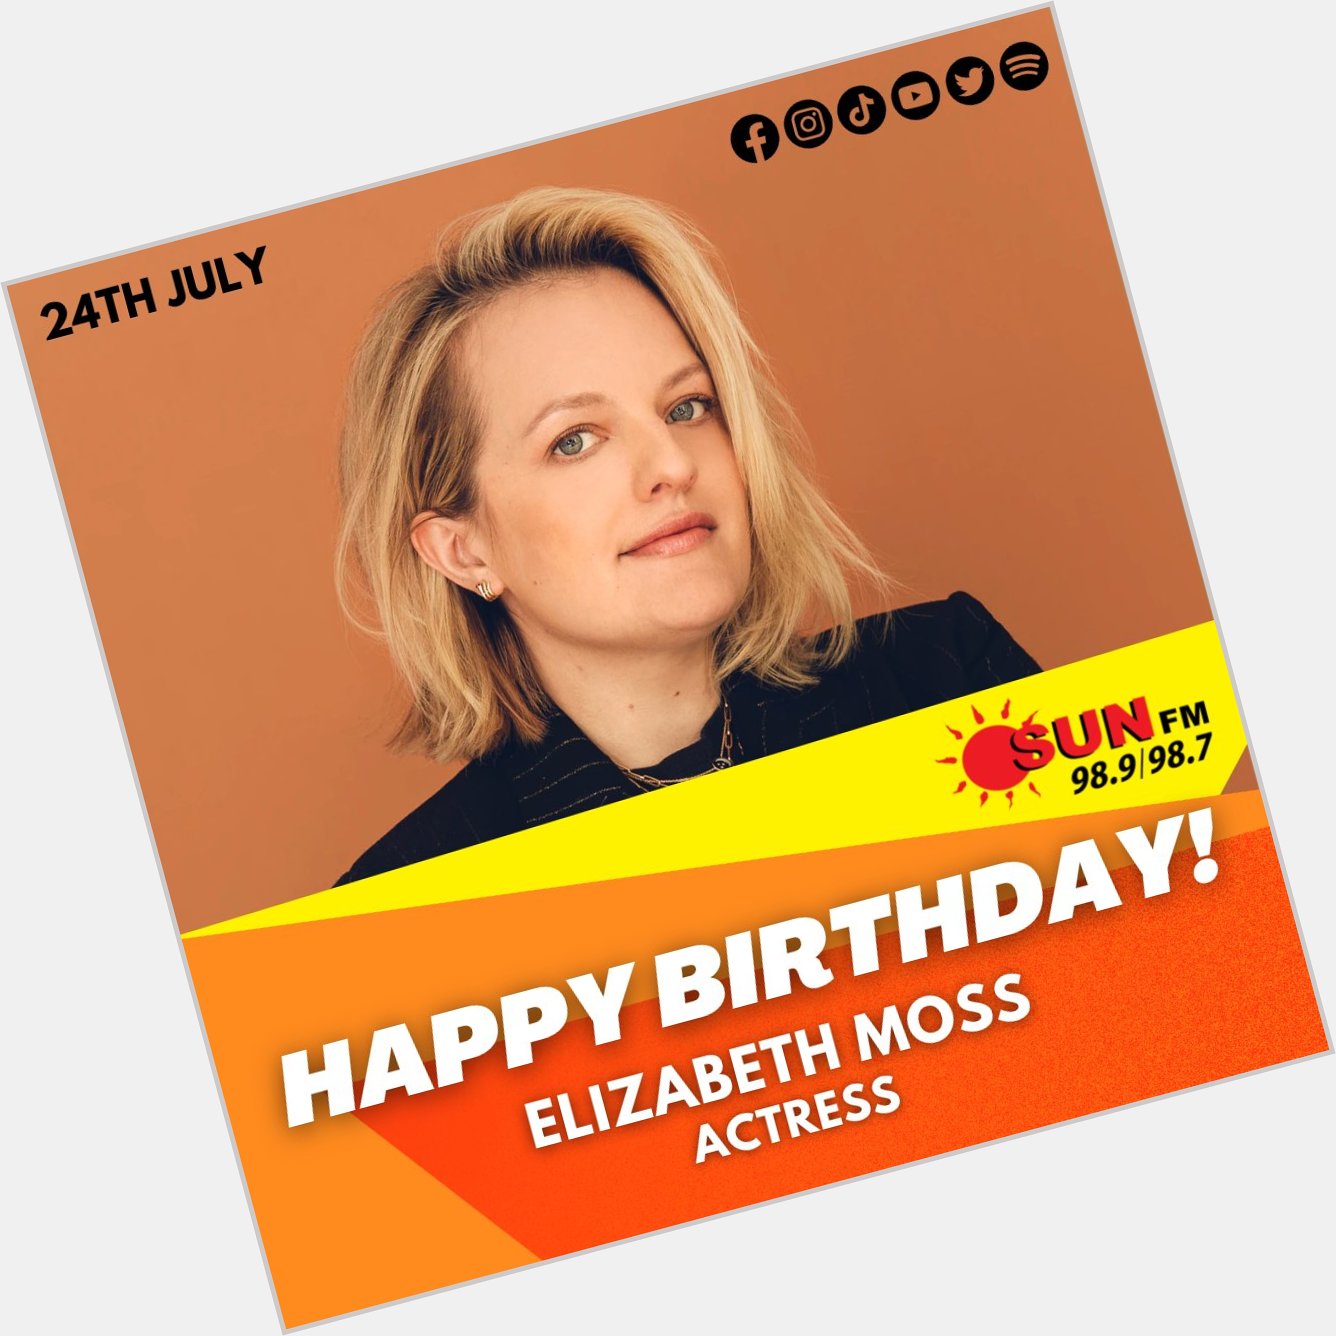 Happy Birthday Elisabeth Moss!  